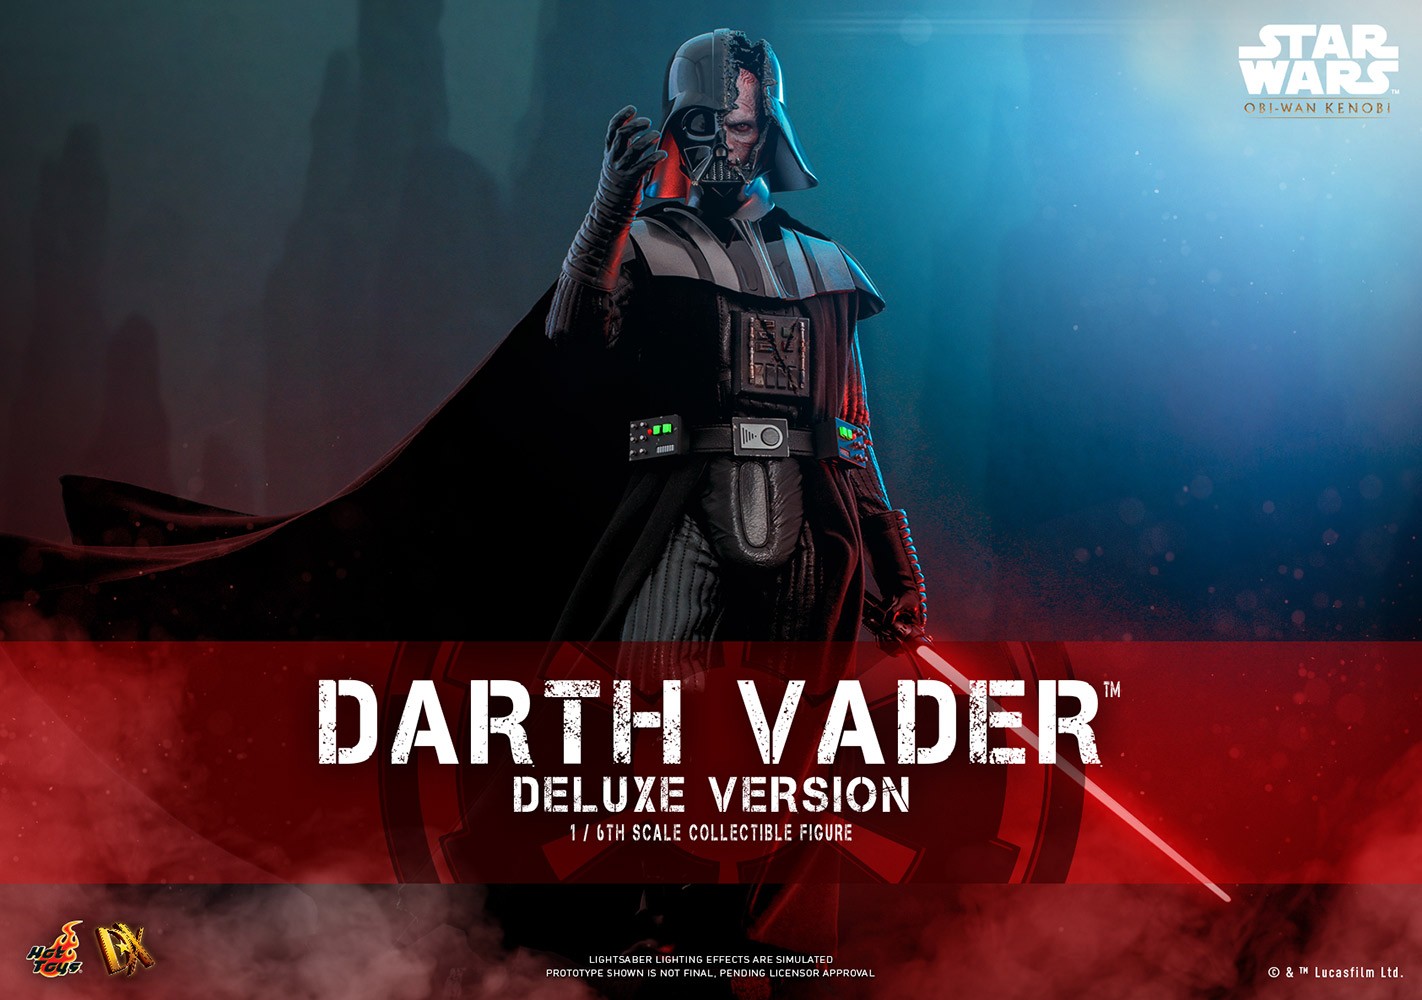 Darth Vader (Deluxe Version) (Special Edition) Exclusive Edition (Prototype Shown) View 1